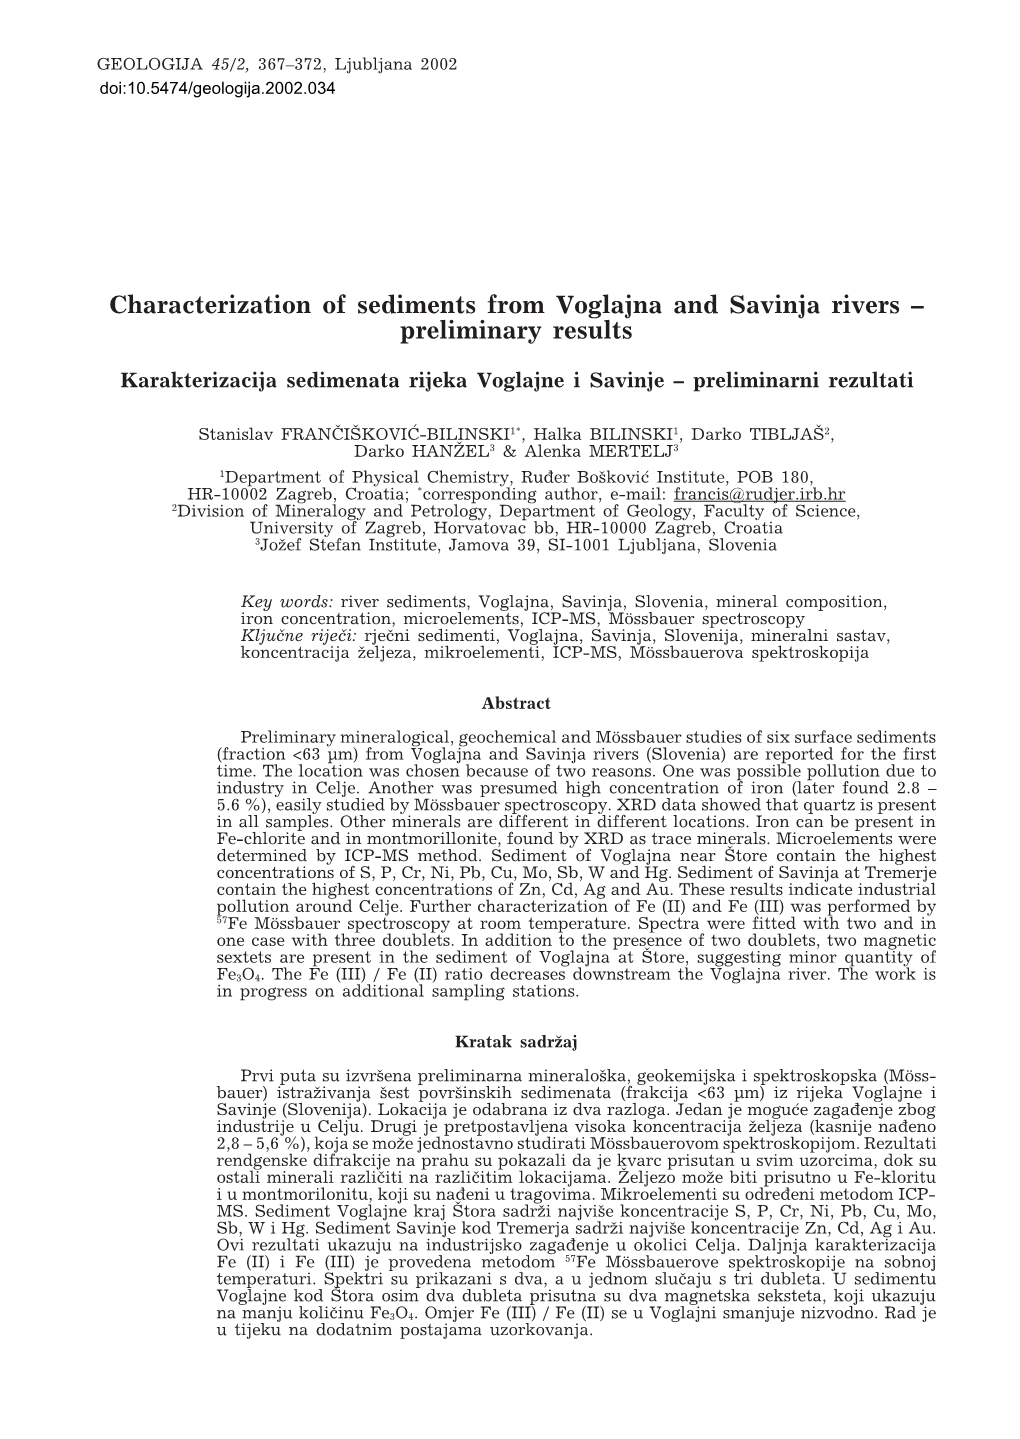 Characterization of Sediments from Voglajna and Savinja Rivers – Preliminary Results